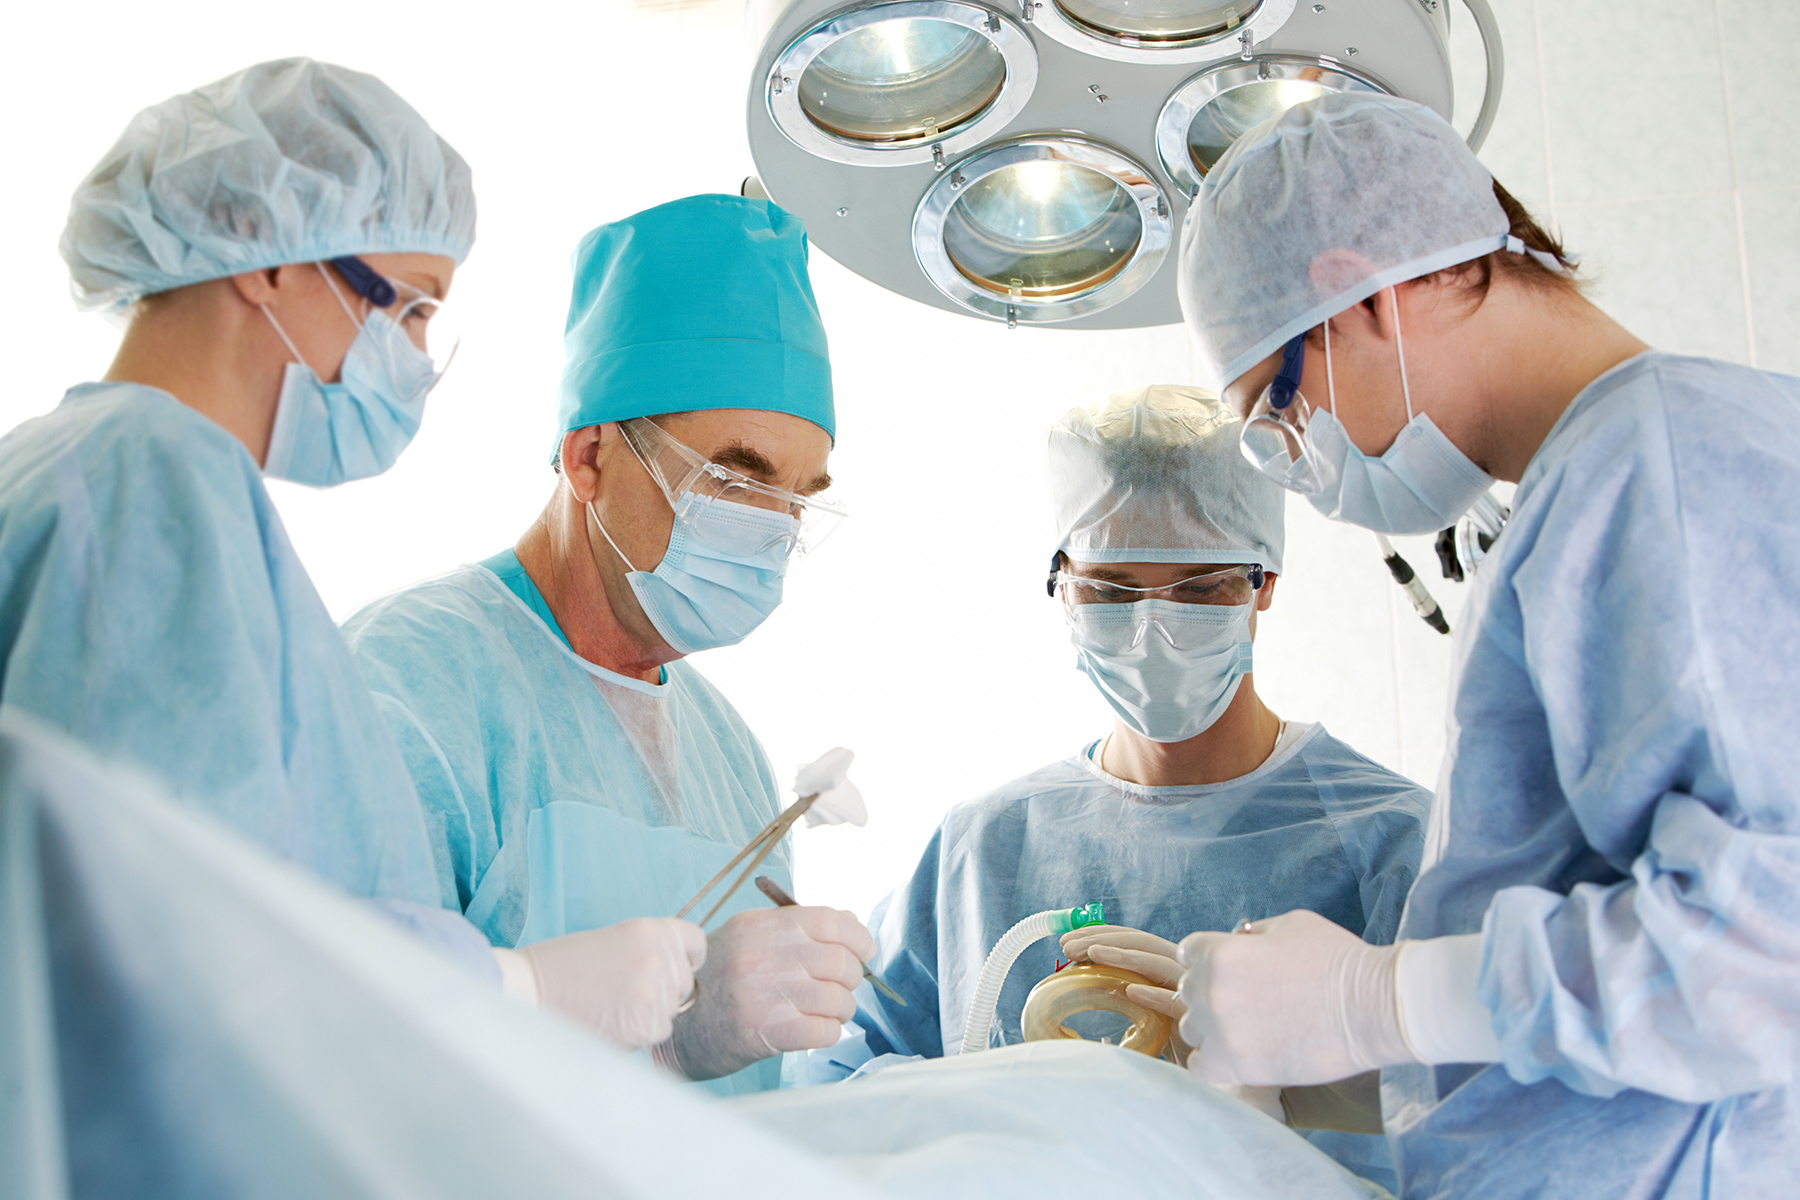 Gallbladder Surgery in Iran